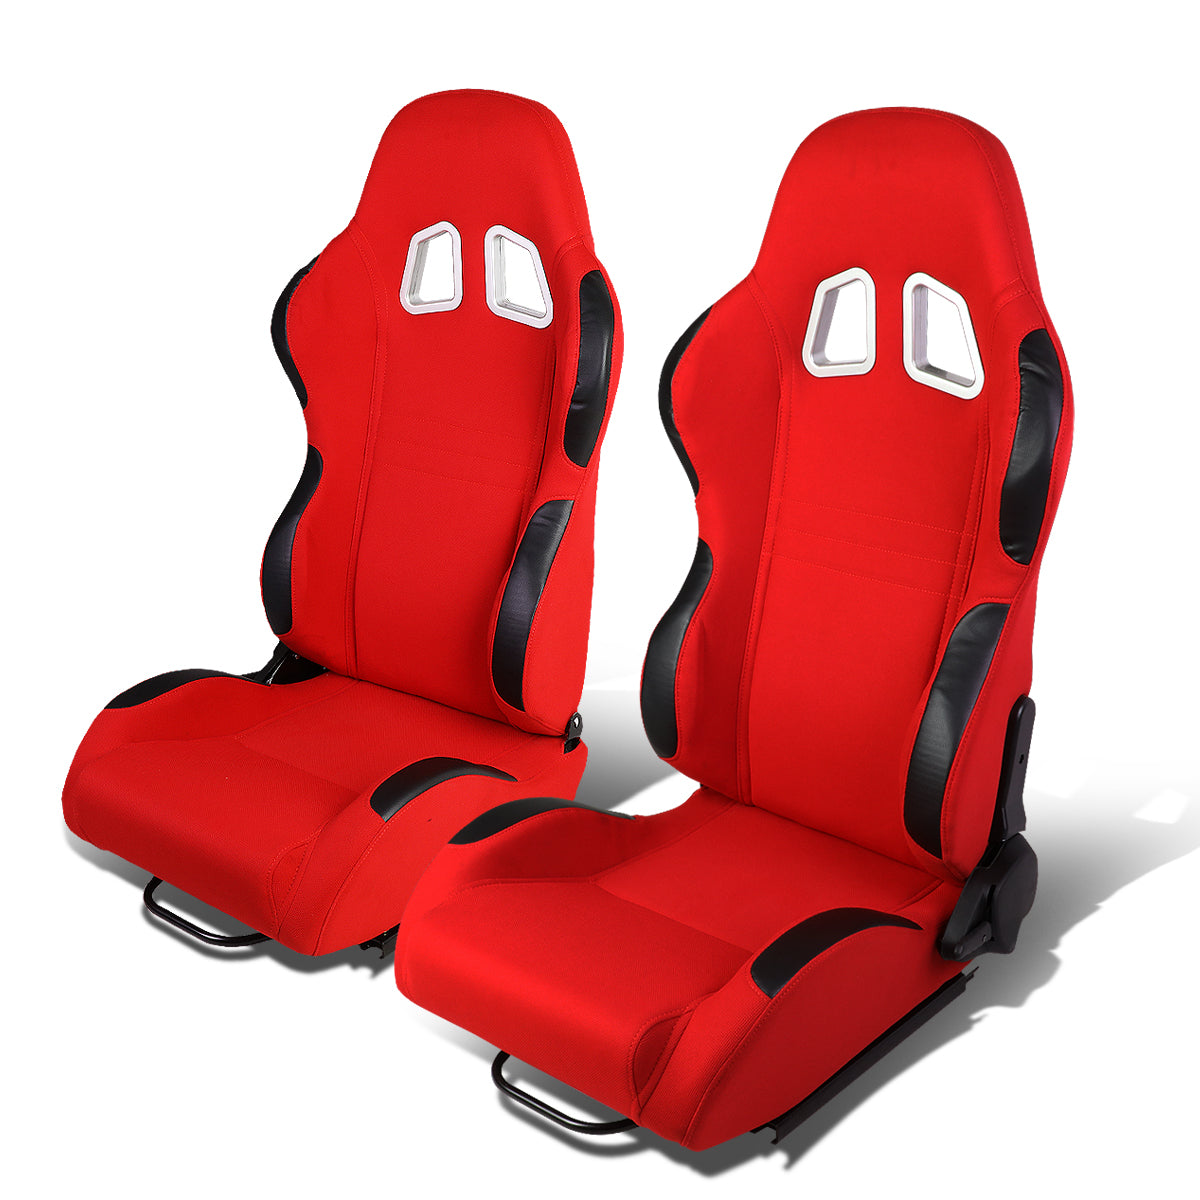 Racing Seats - Reclinable - Cloth - Type-R - Pair